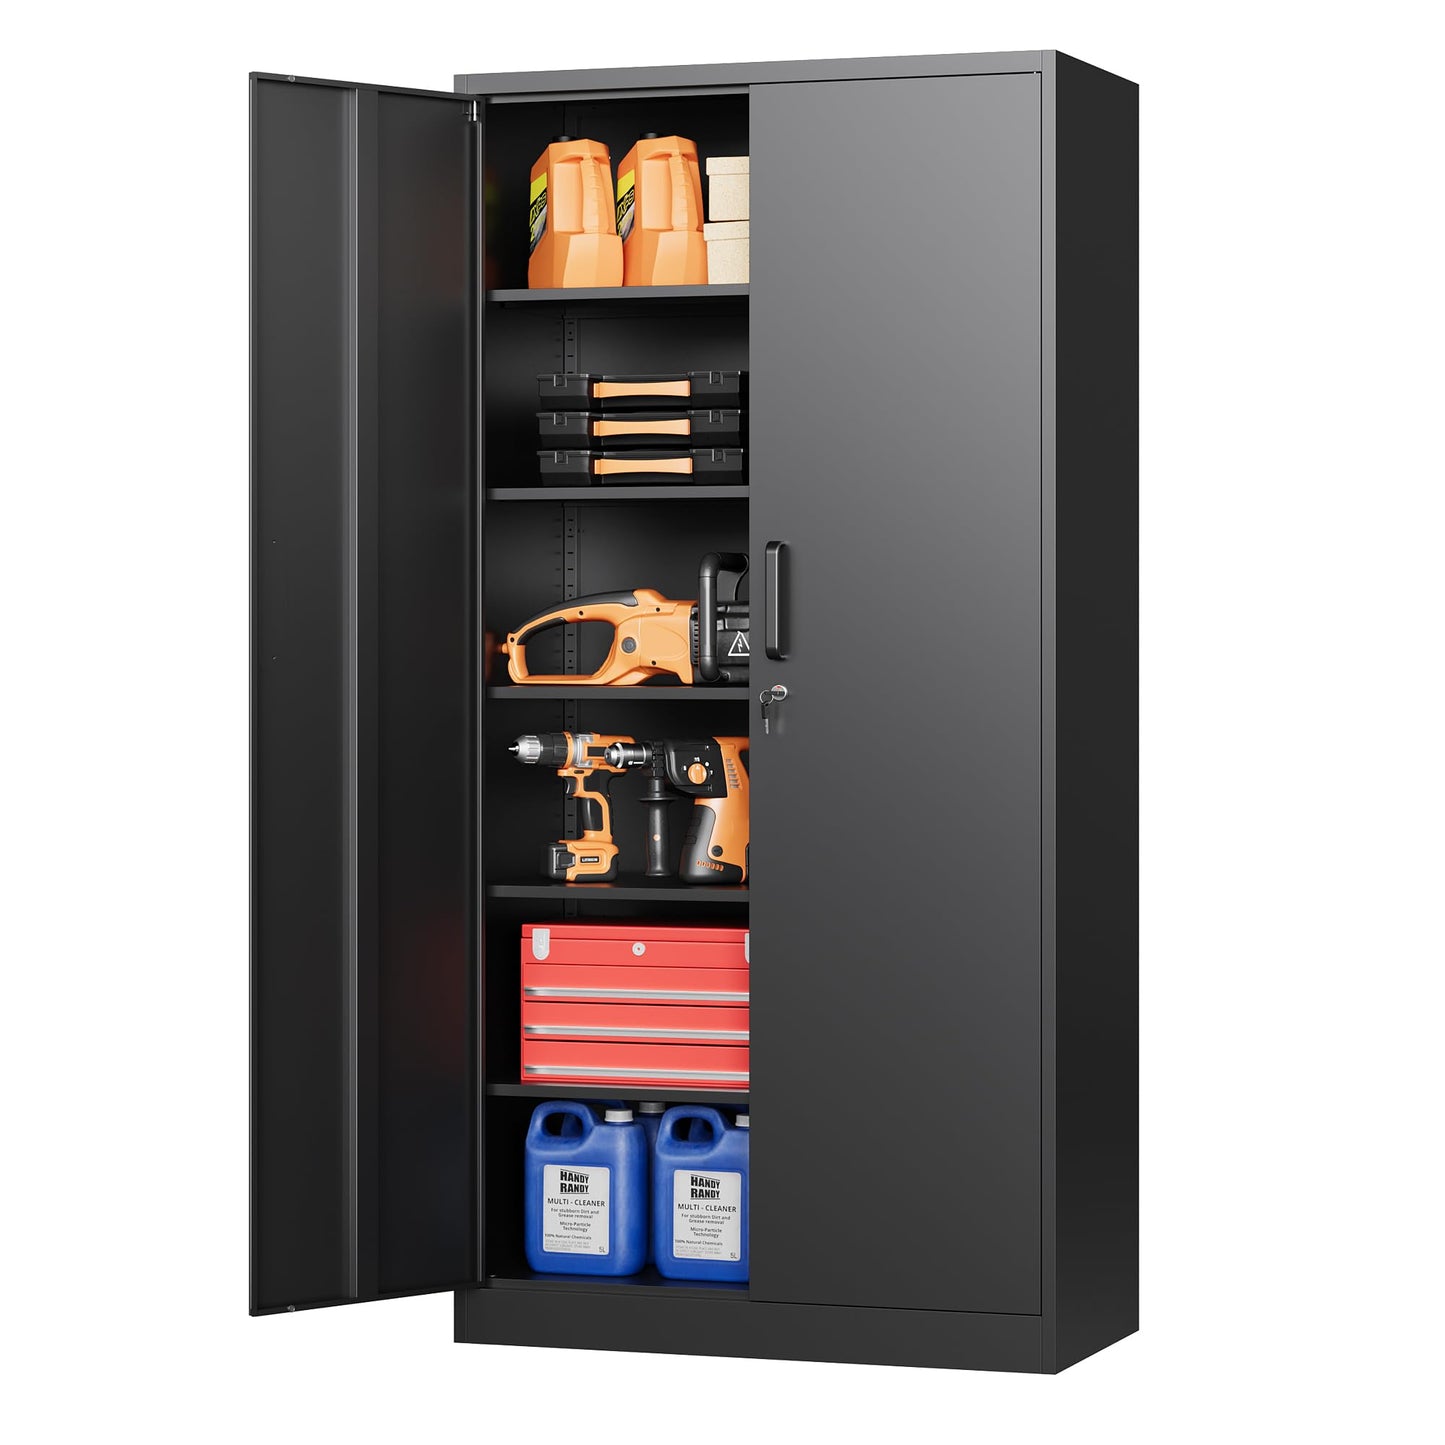 STANI Metal Storage Cabinet, Locking Metal Storage Cabinet with 4 Adjustable Shelves, 71”H×32”W×16”D Tall Metal Storage Cabinet for